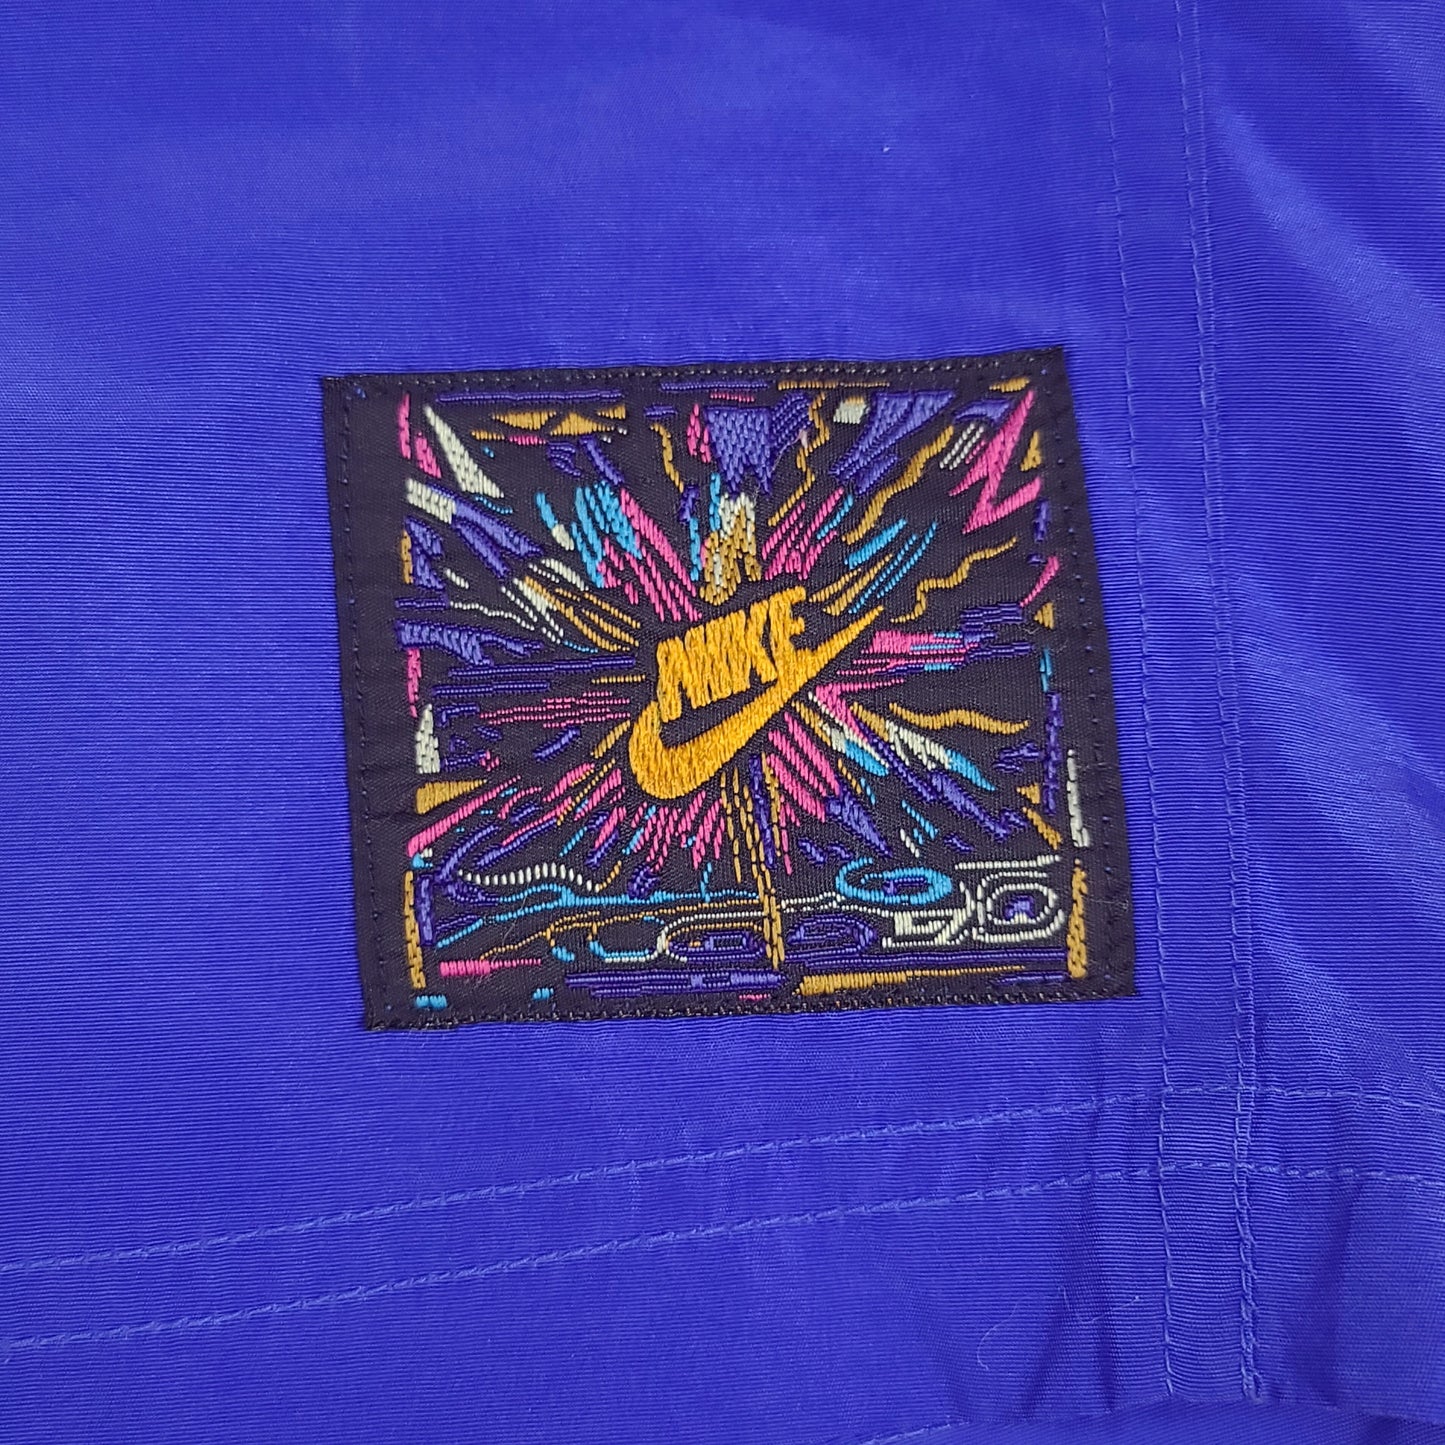 Vintage Nike Blue Purple Color Block Nylon Shorts (Korean Exclusive)